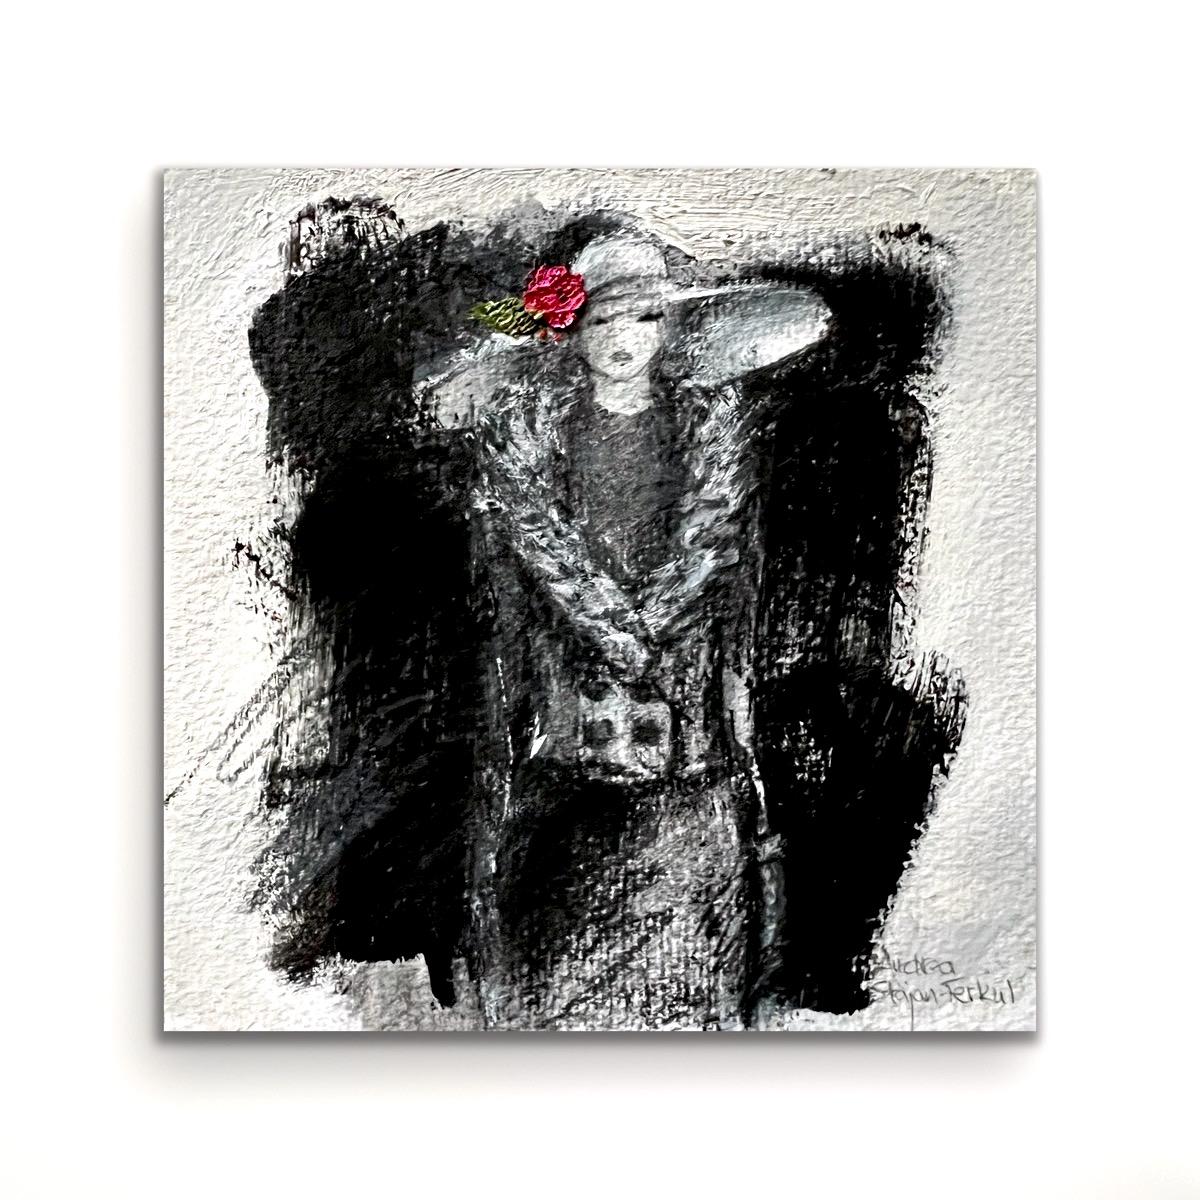 Andrea Stajan-Ferkul Figurative Art - The Hat Lady - 5"x5" Framed Artwork (Black, White, Red, Figurative, Fashion)